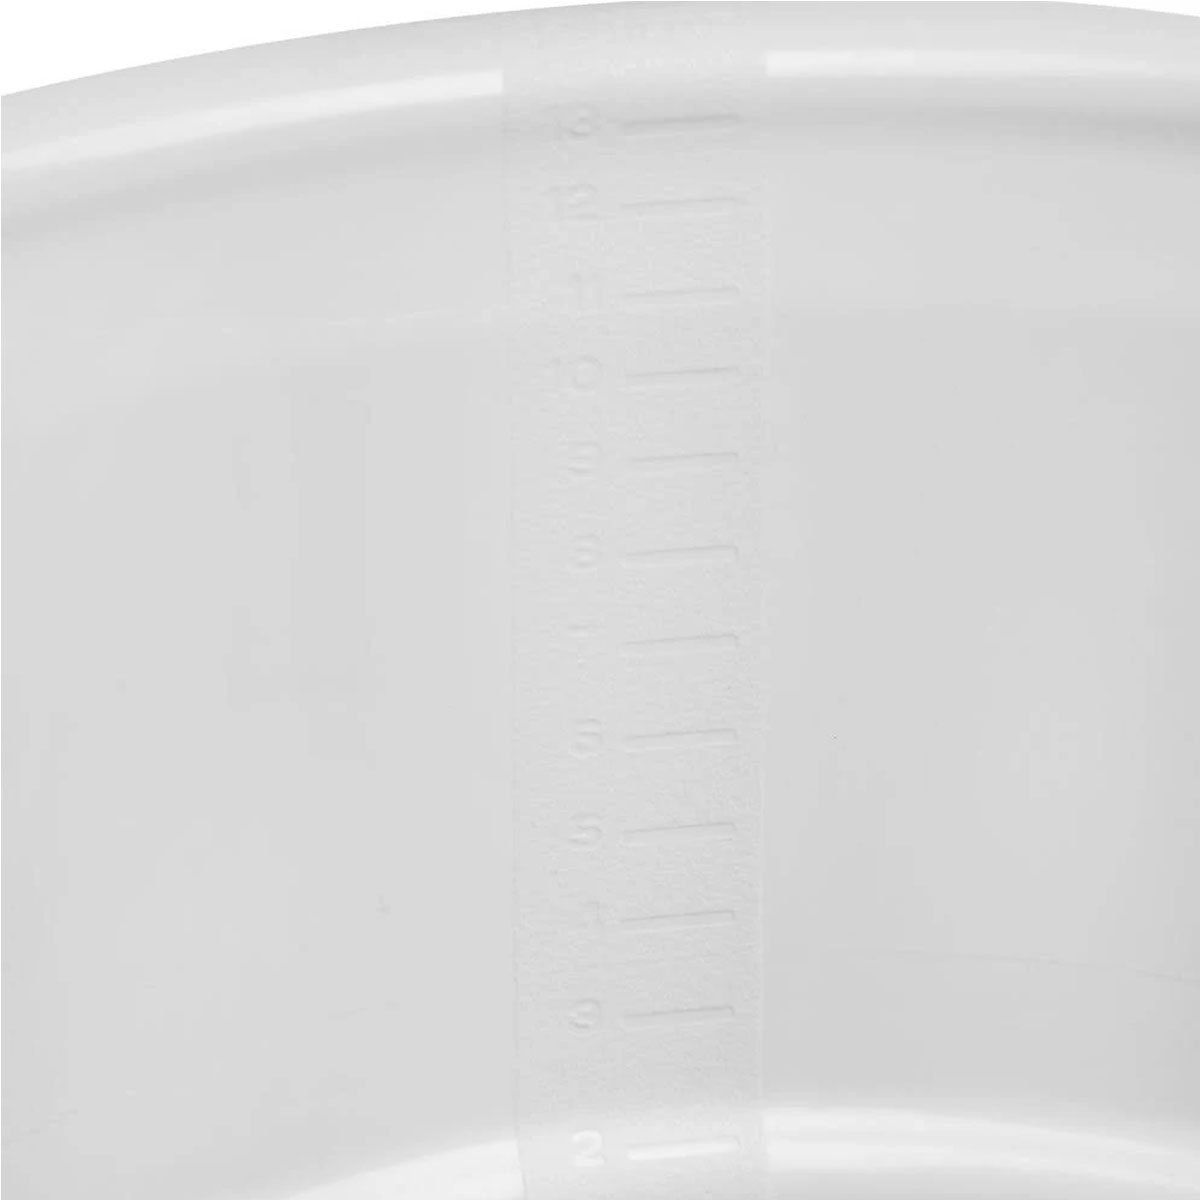 Bacia Plástica 14L Astra com Alças Laterais Balde Redondo para Limpeza Branco - 4